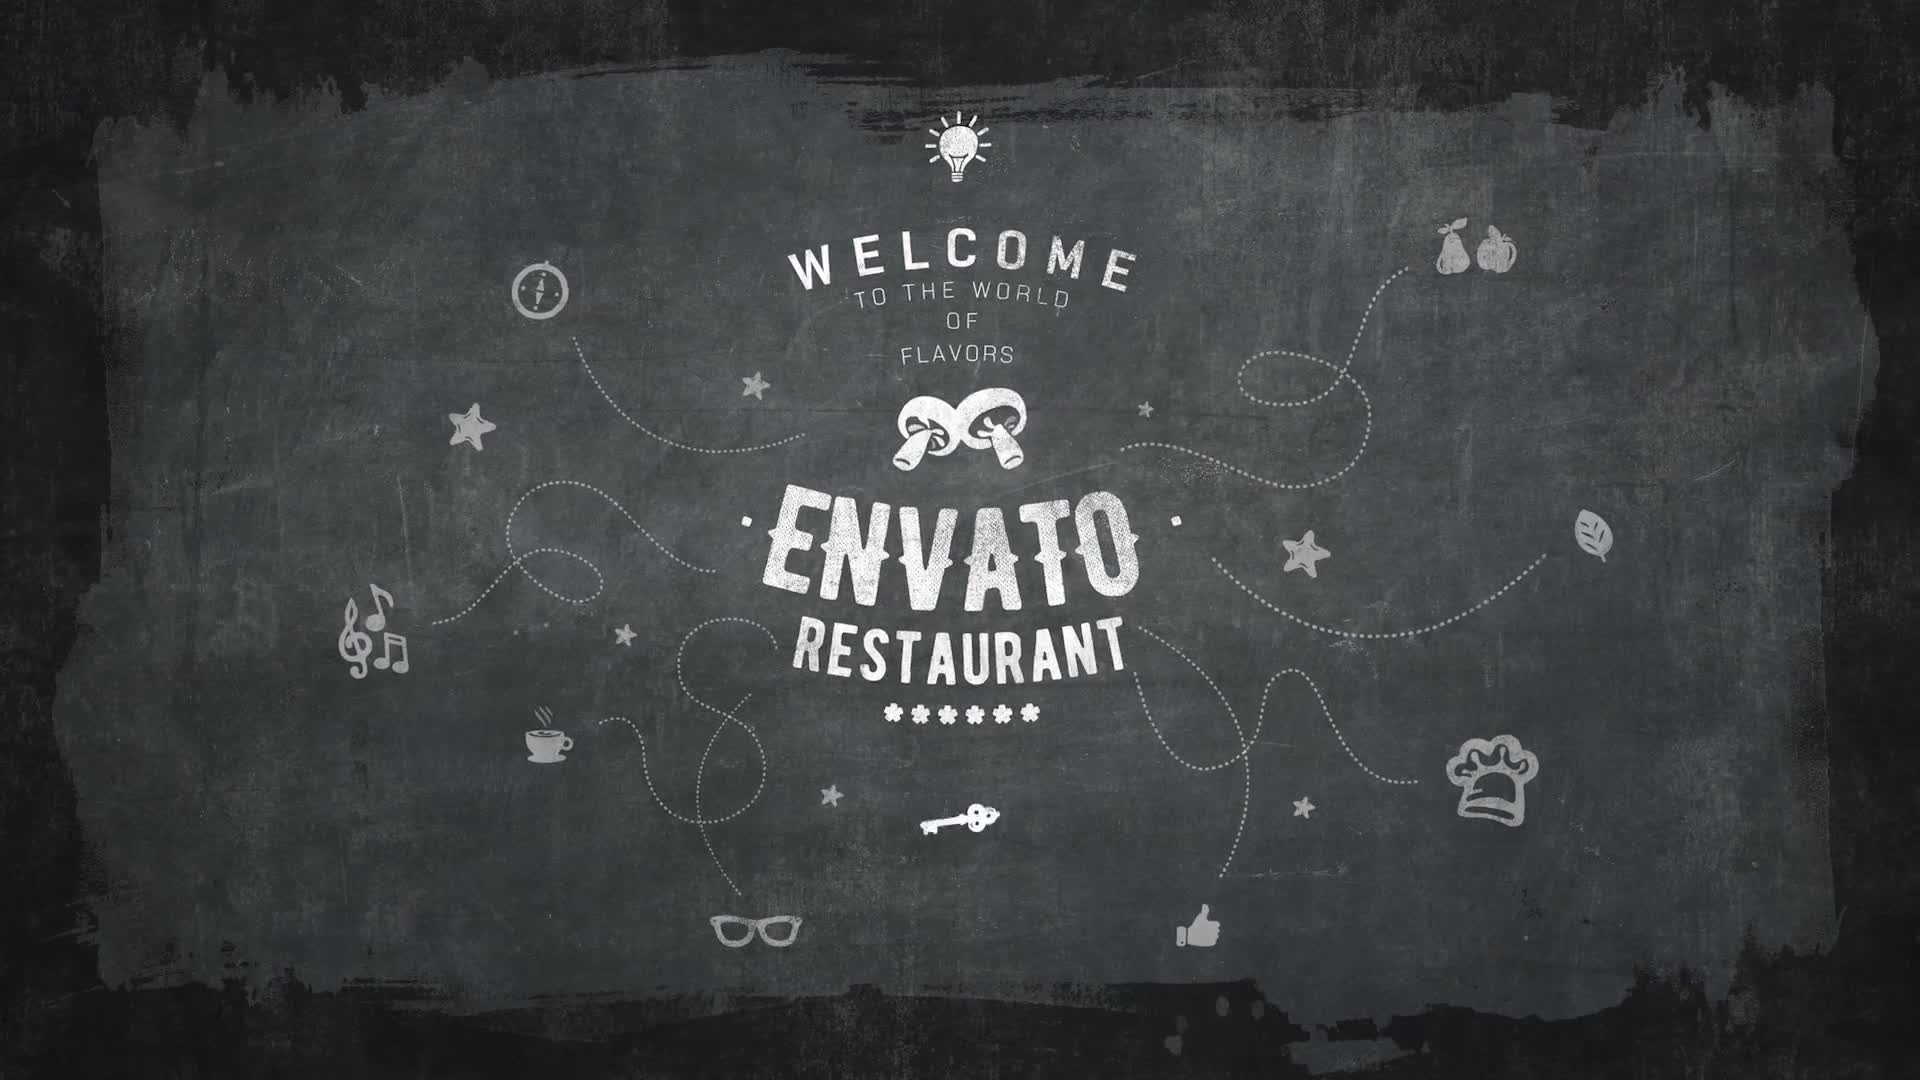 Envato Restaurant/ Cafe Promo/ Modern Bar Menu/ Fast Food/ Vegetarian Dish/ Meal Delivery/ Lunchroom - Download Videohive 12599089